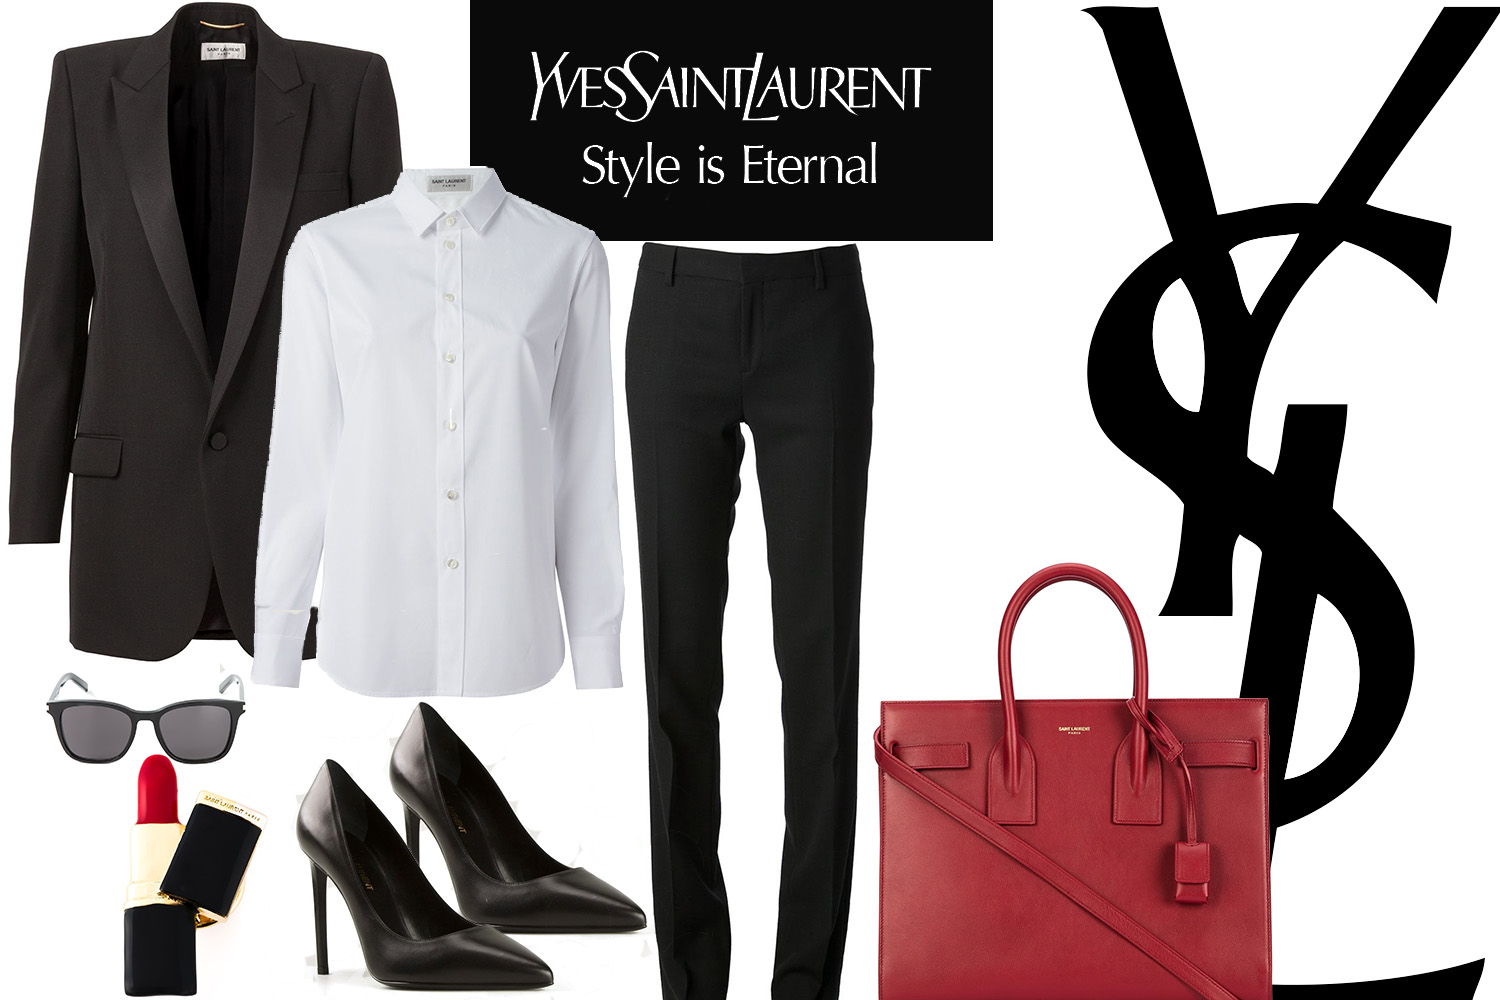 Style is eternal according to Yves Saint Laurent | Modavracha